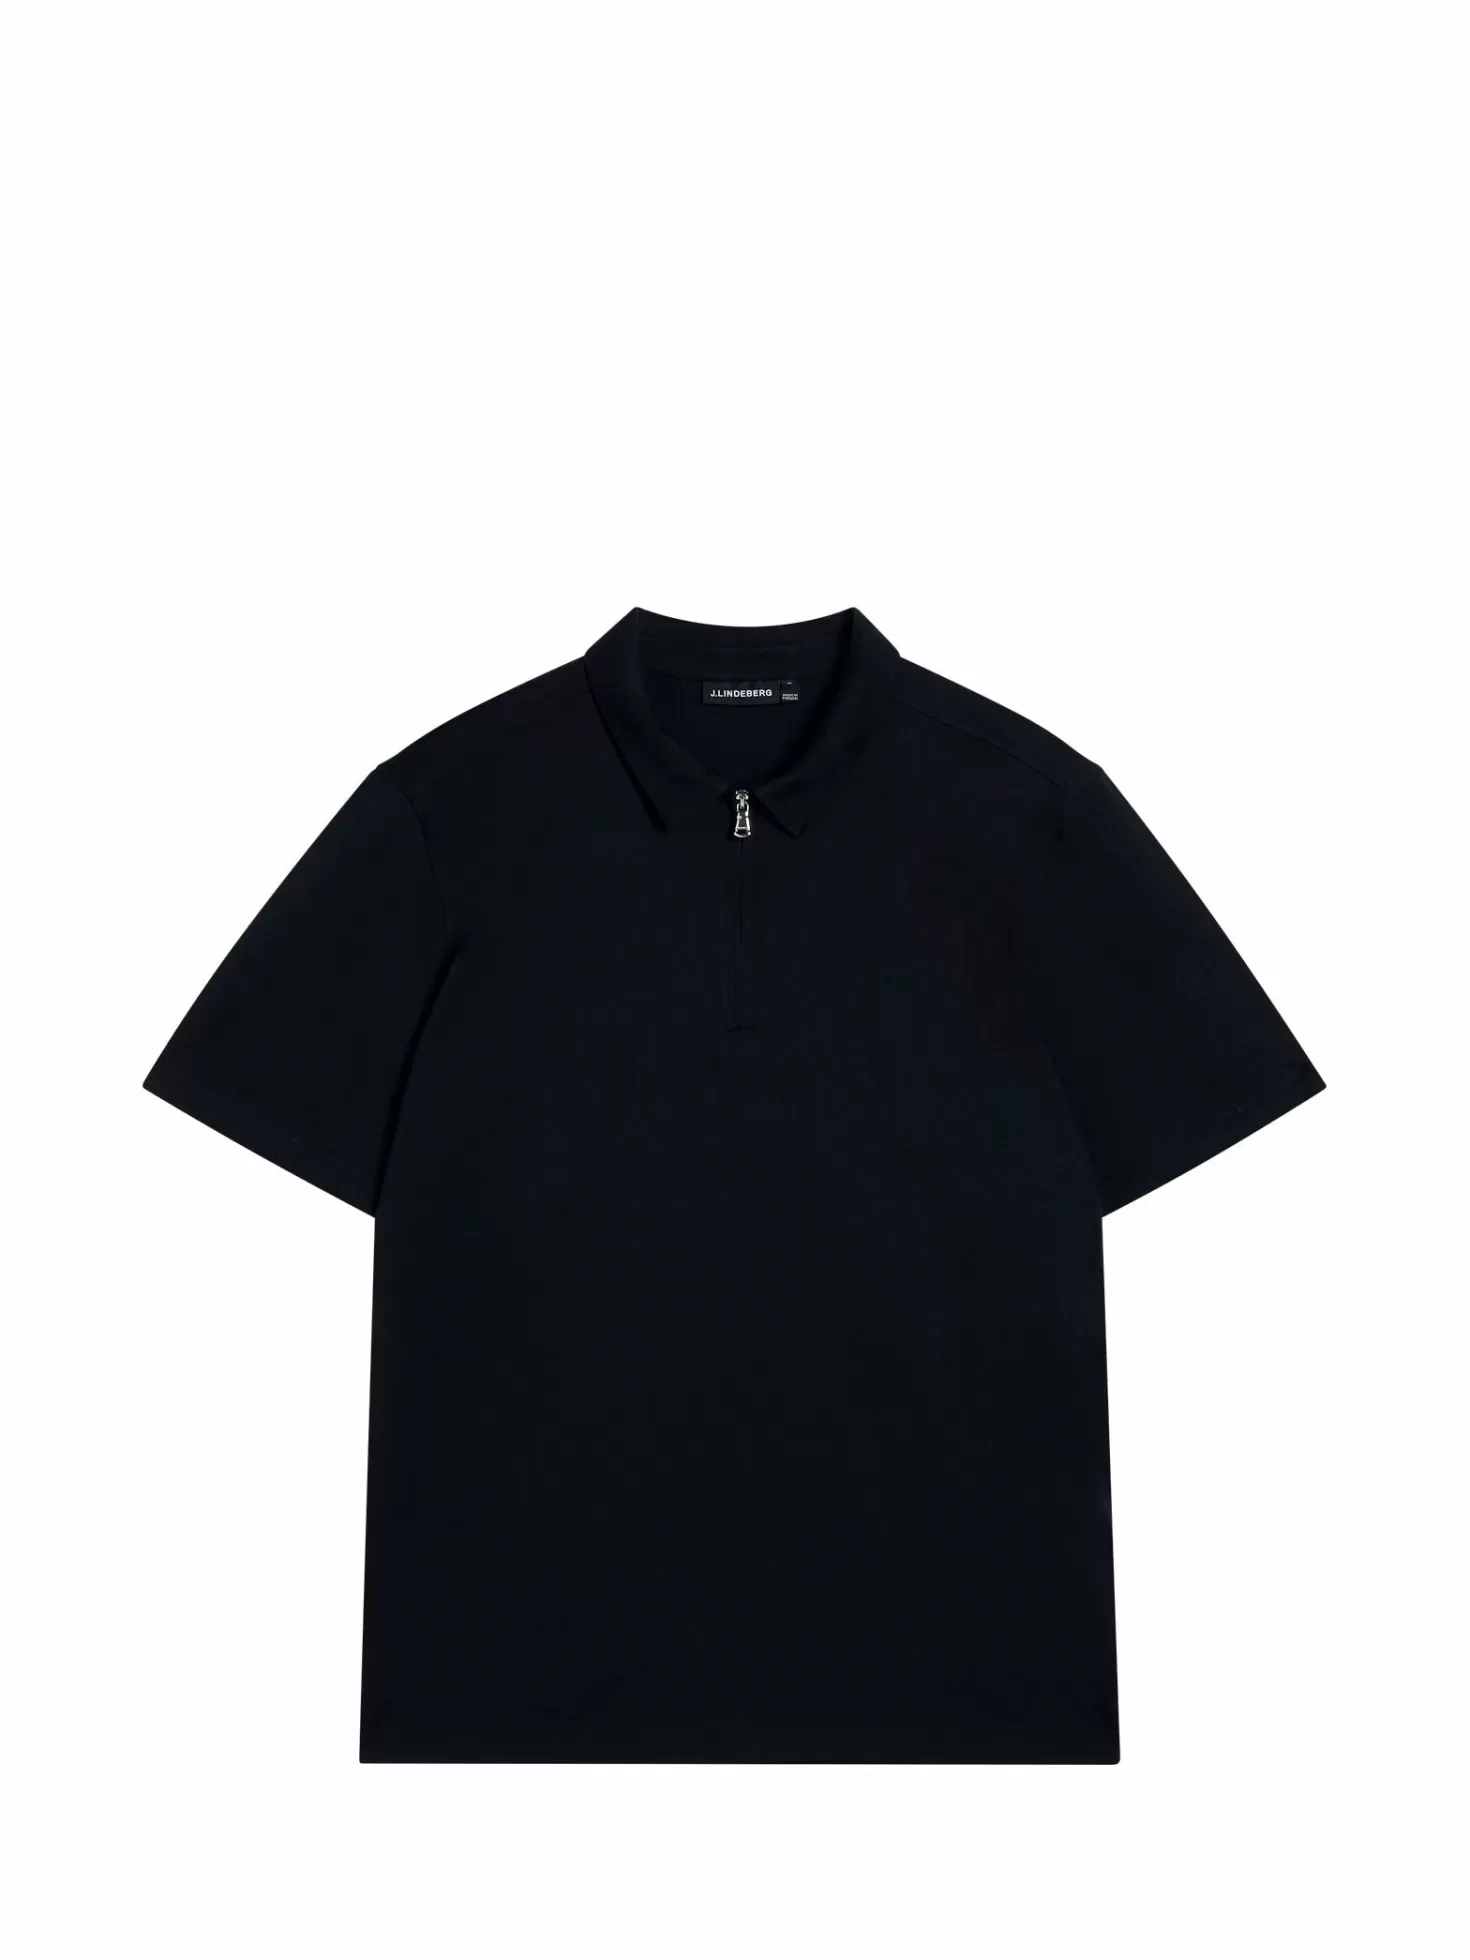 Polotröjor<J.Lindeberg Asher Zip Ss Polo Shirt Black